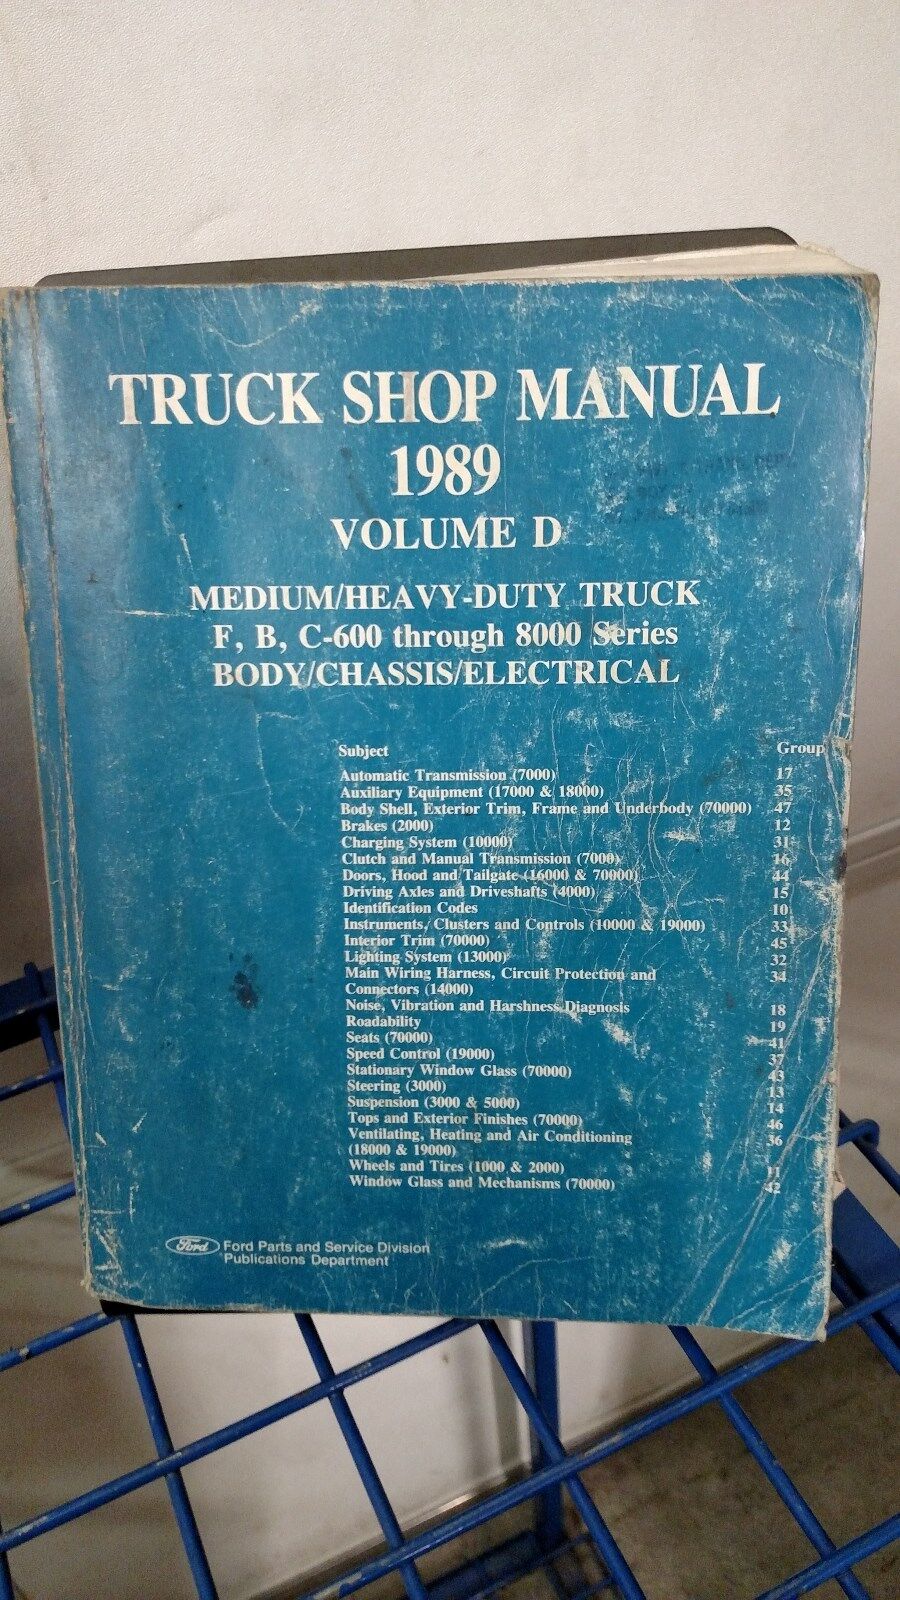 1989 Ford Medium / Heavy-Duty Truck Vol D Shop Manual F B C-600-8000 Series 